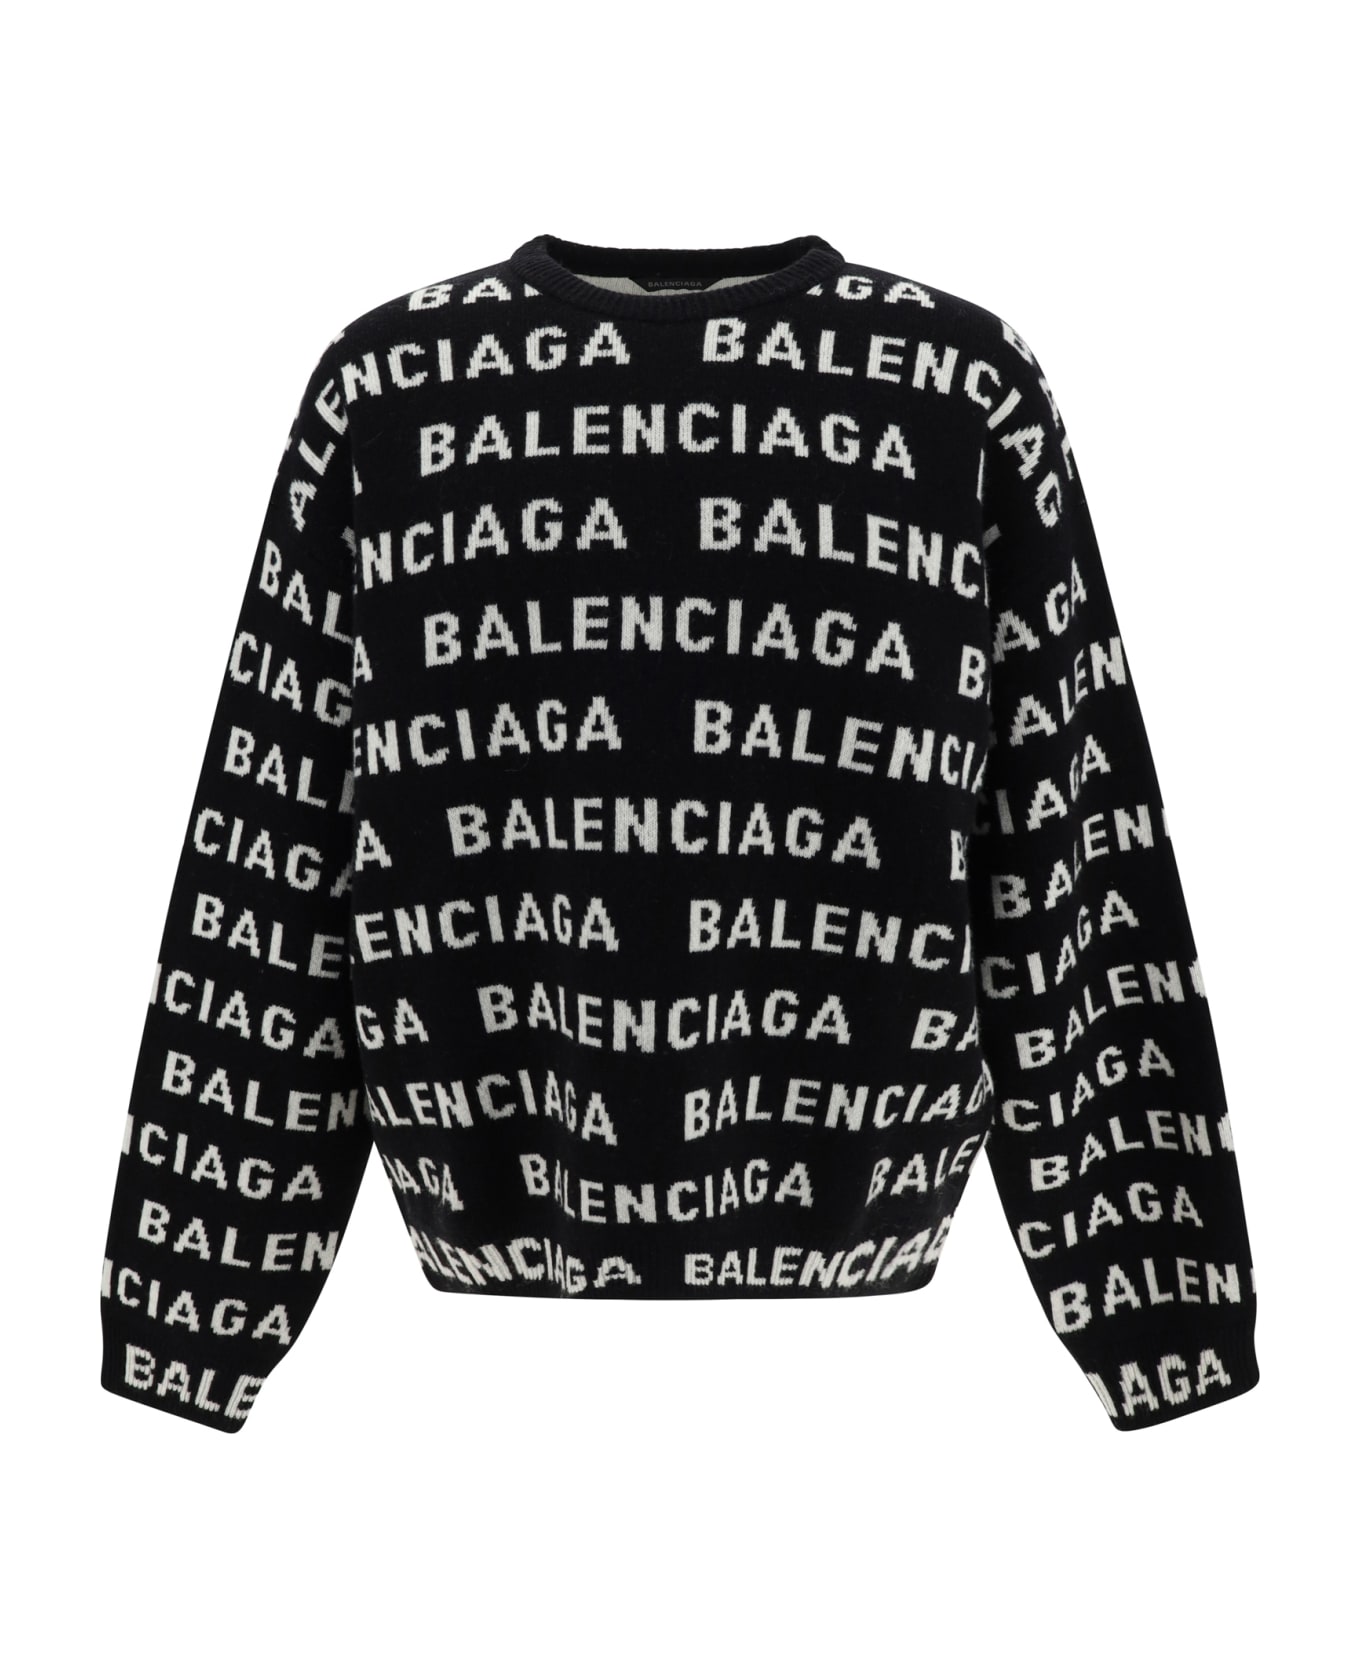 Balenciaga Sweater - Black/white